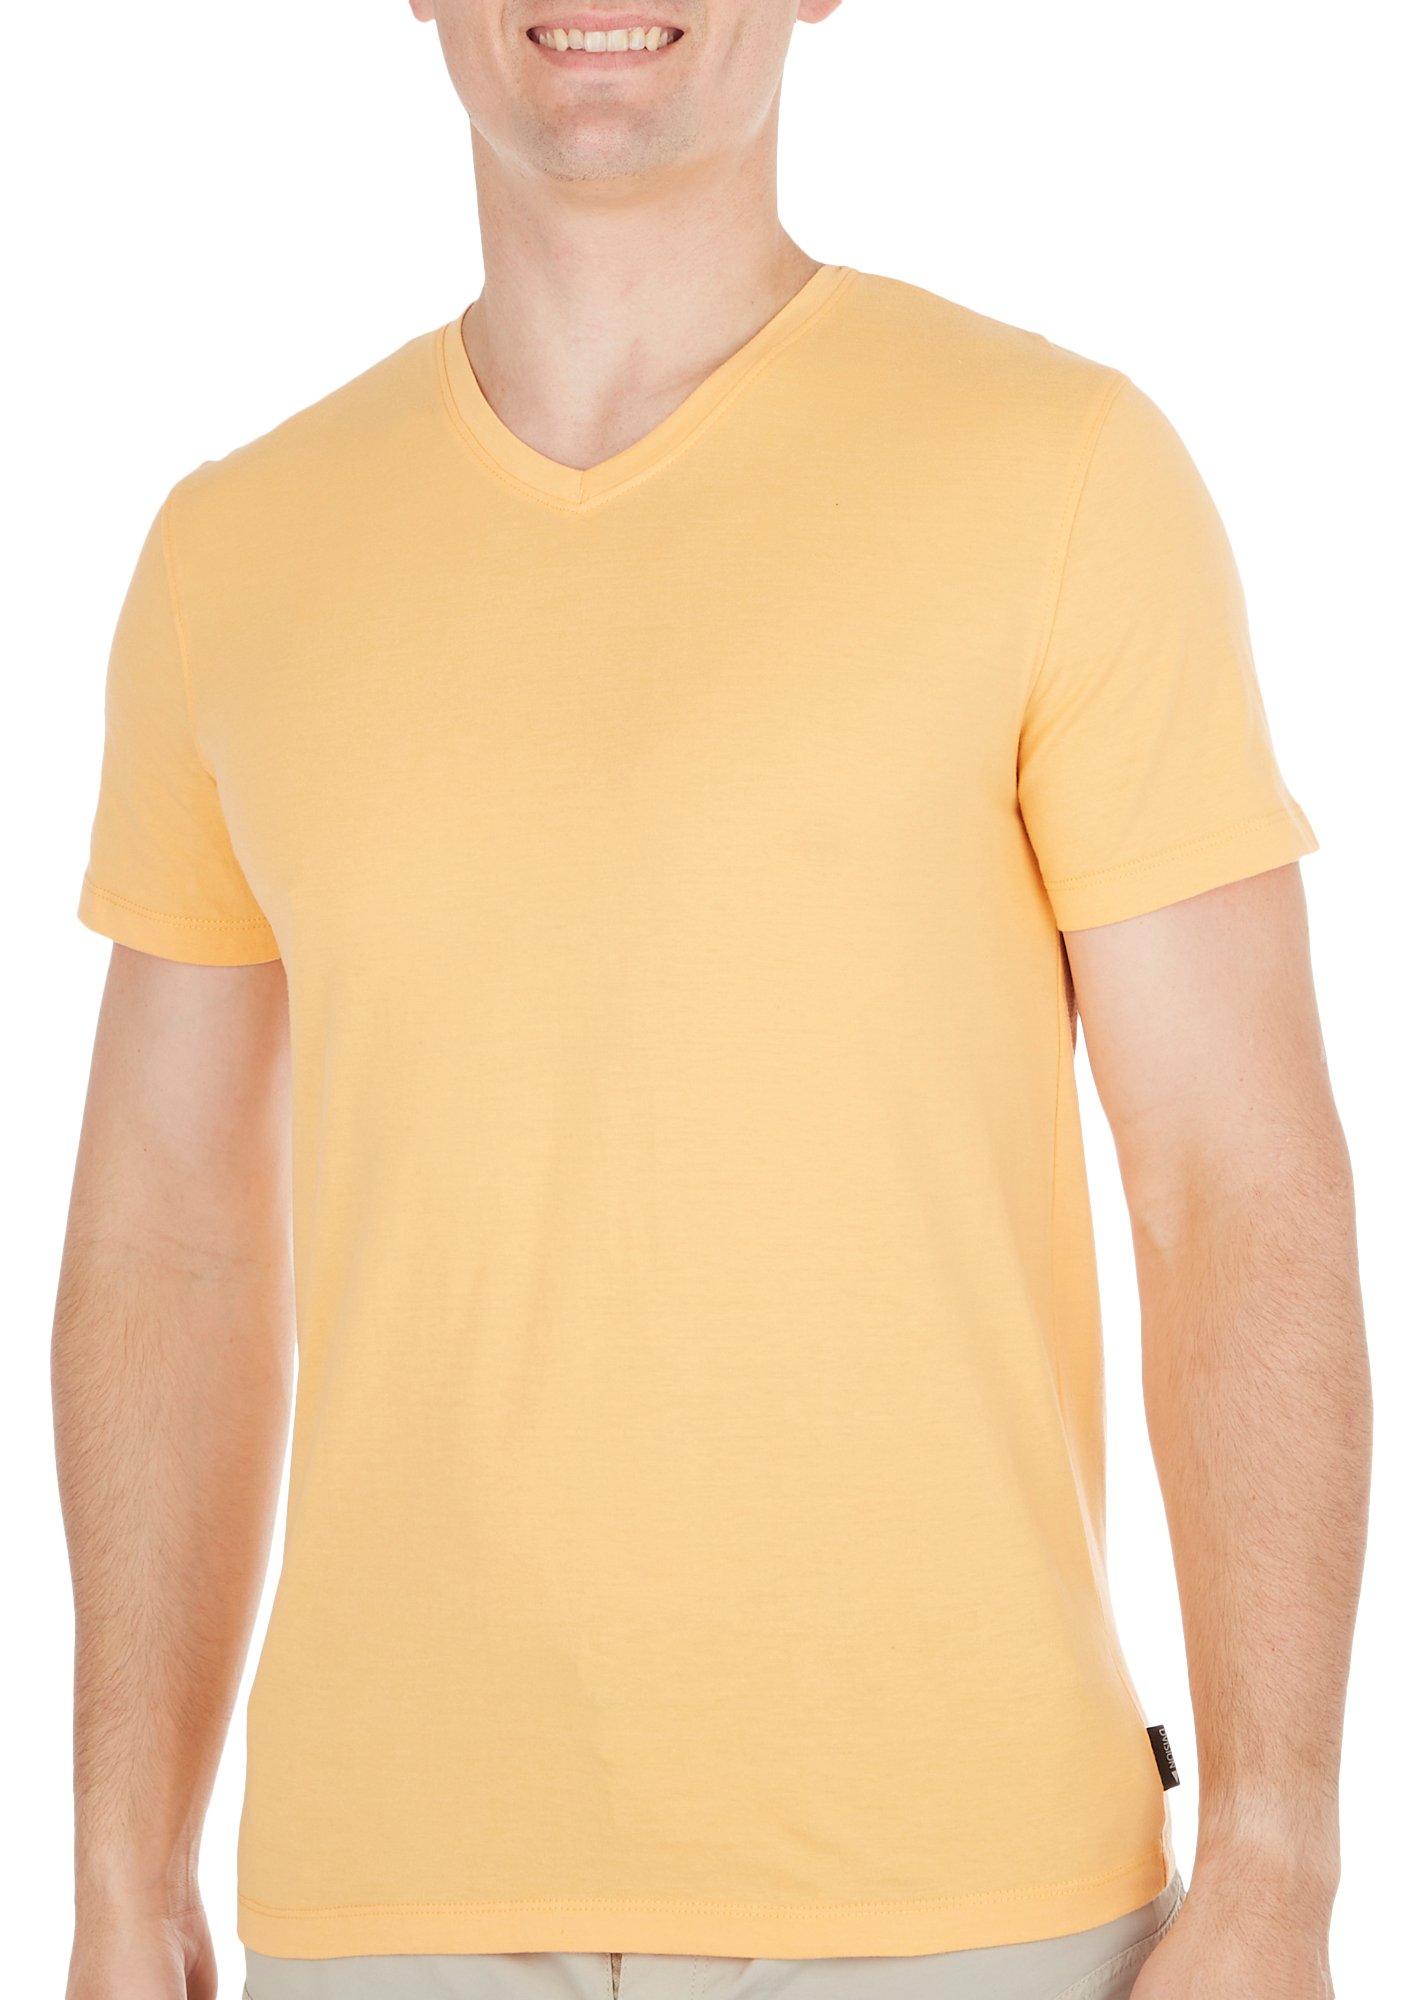 DVISION Mens Solid V-Neck Short Sleeve T-Shirt